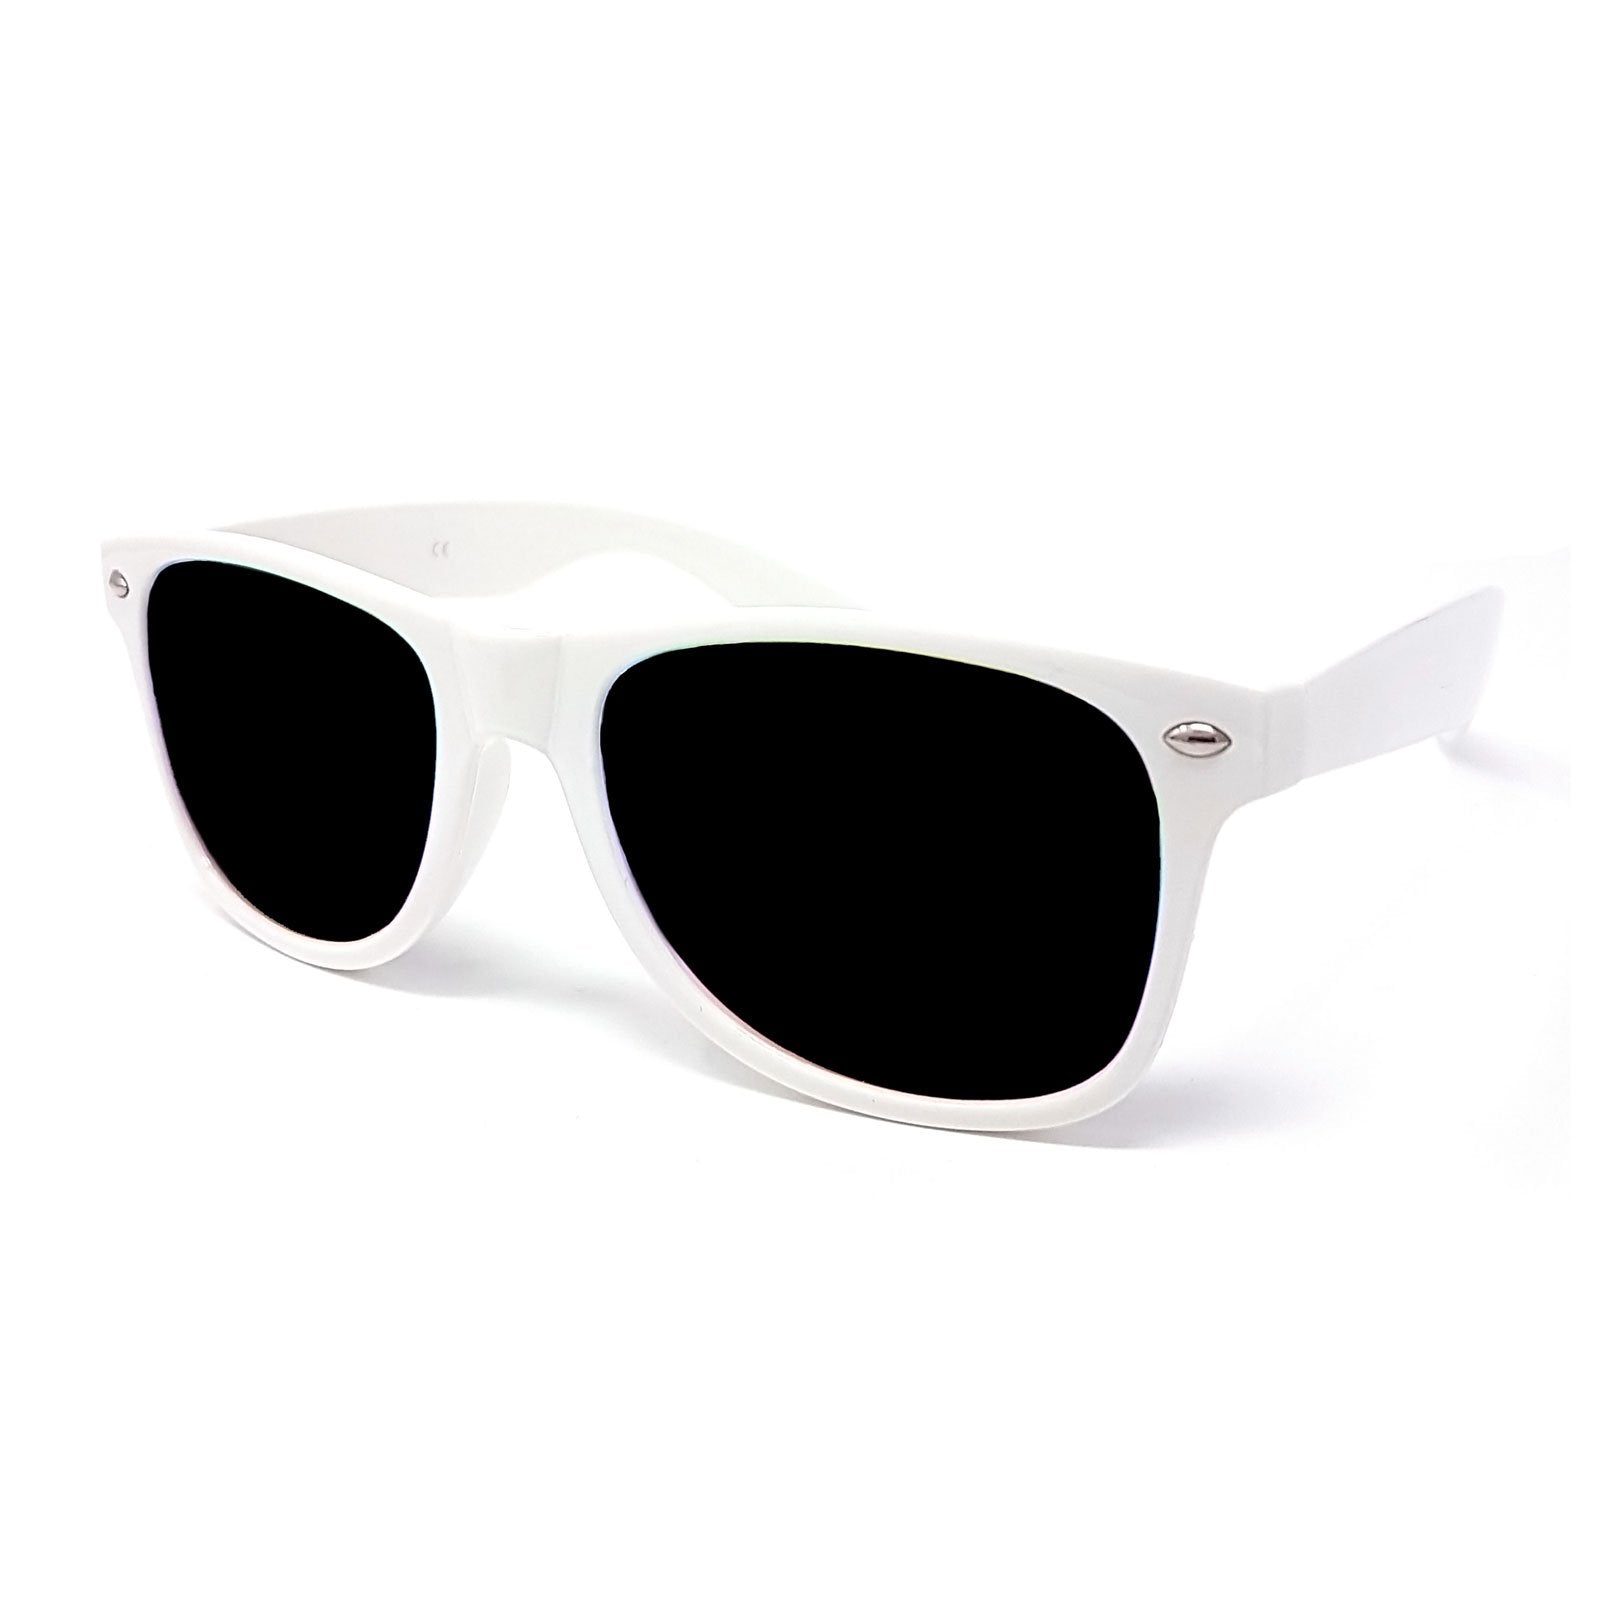 Wholesale Classic Sunglasses - White Frame, Black Lens